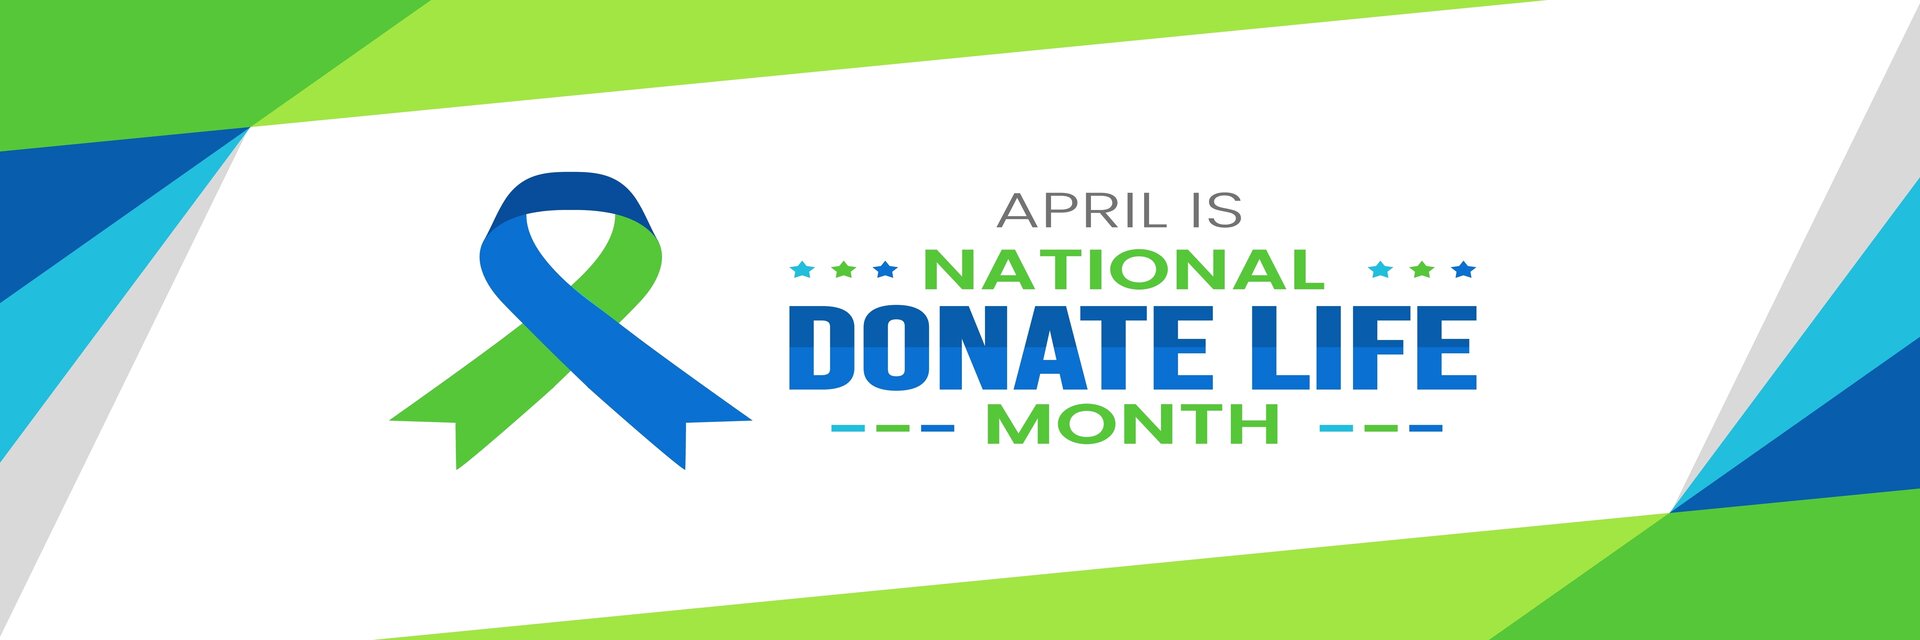 April donate life month